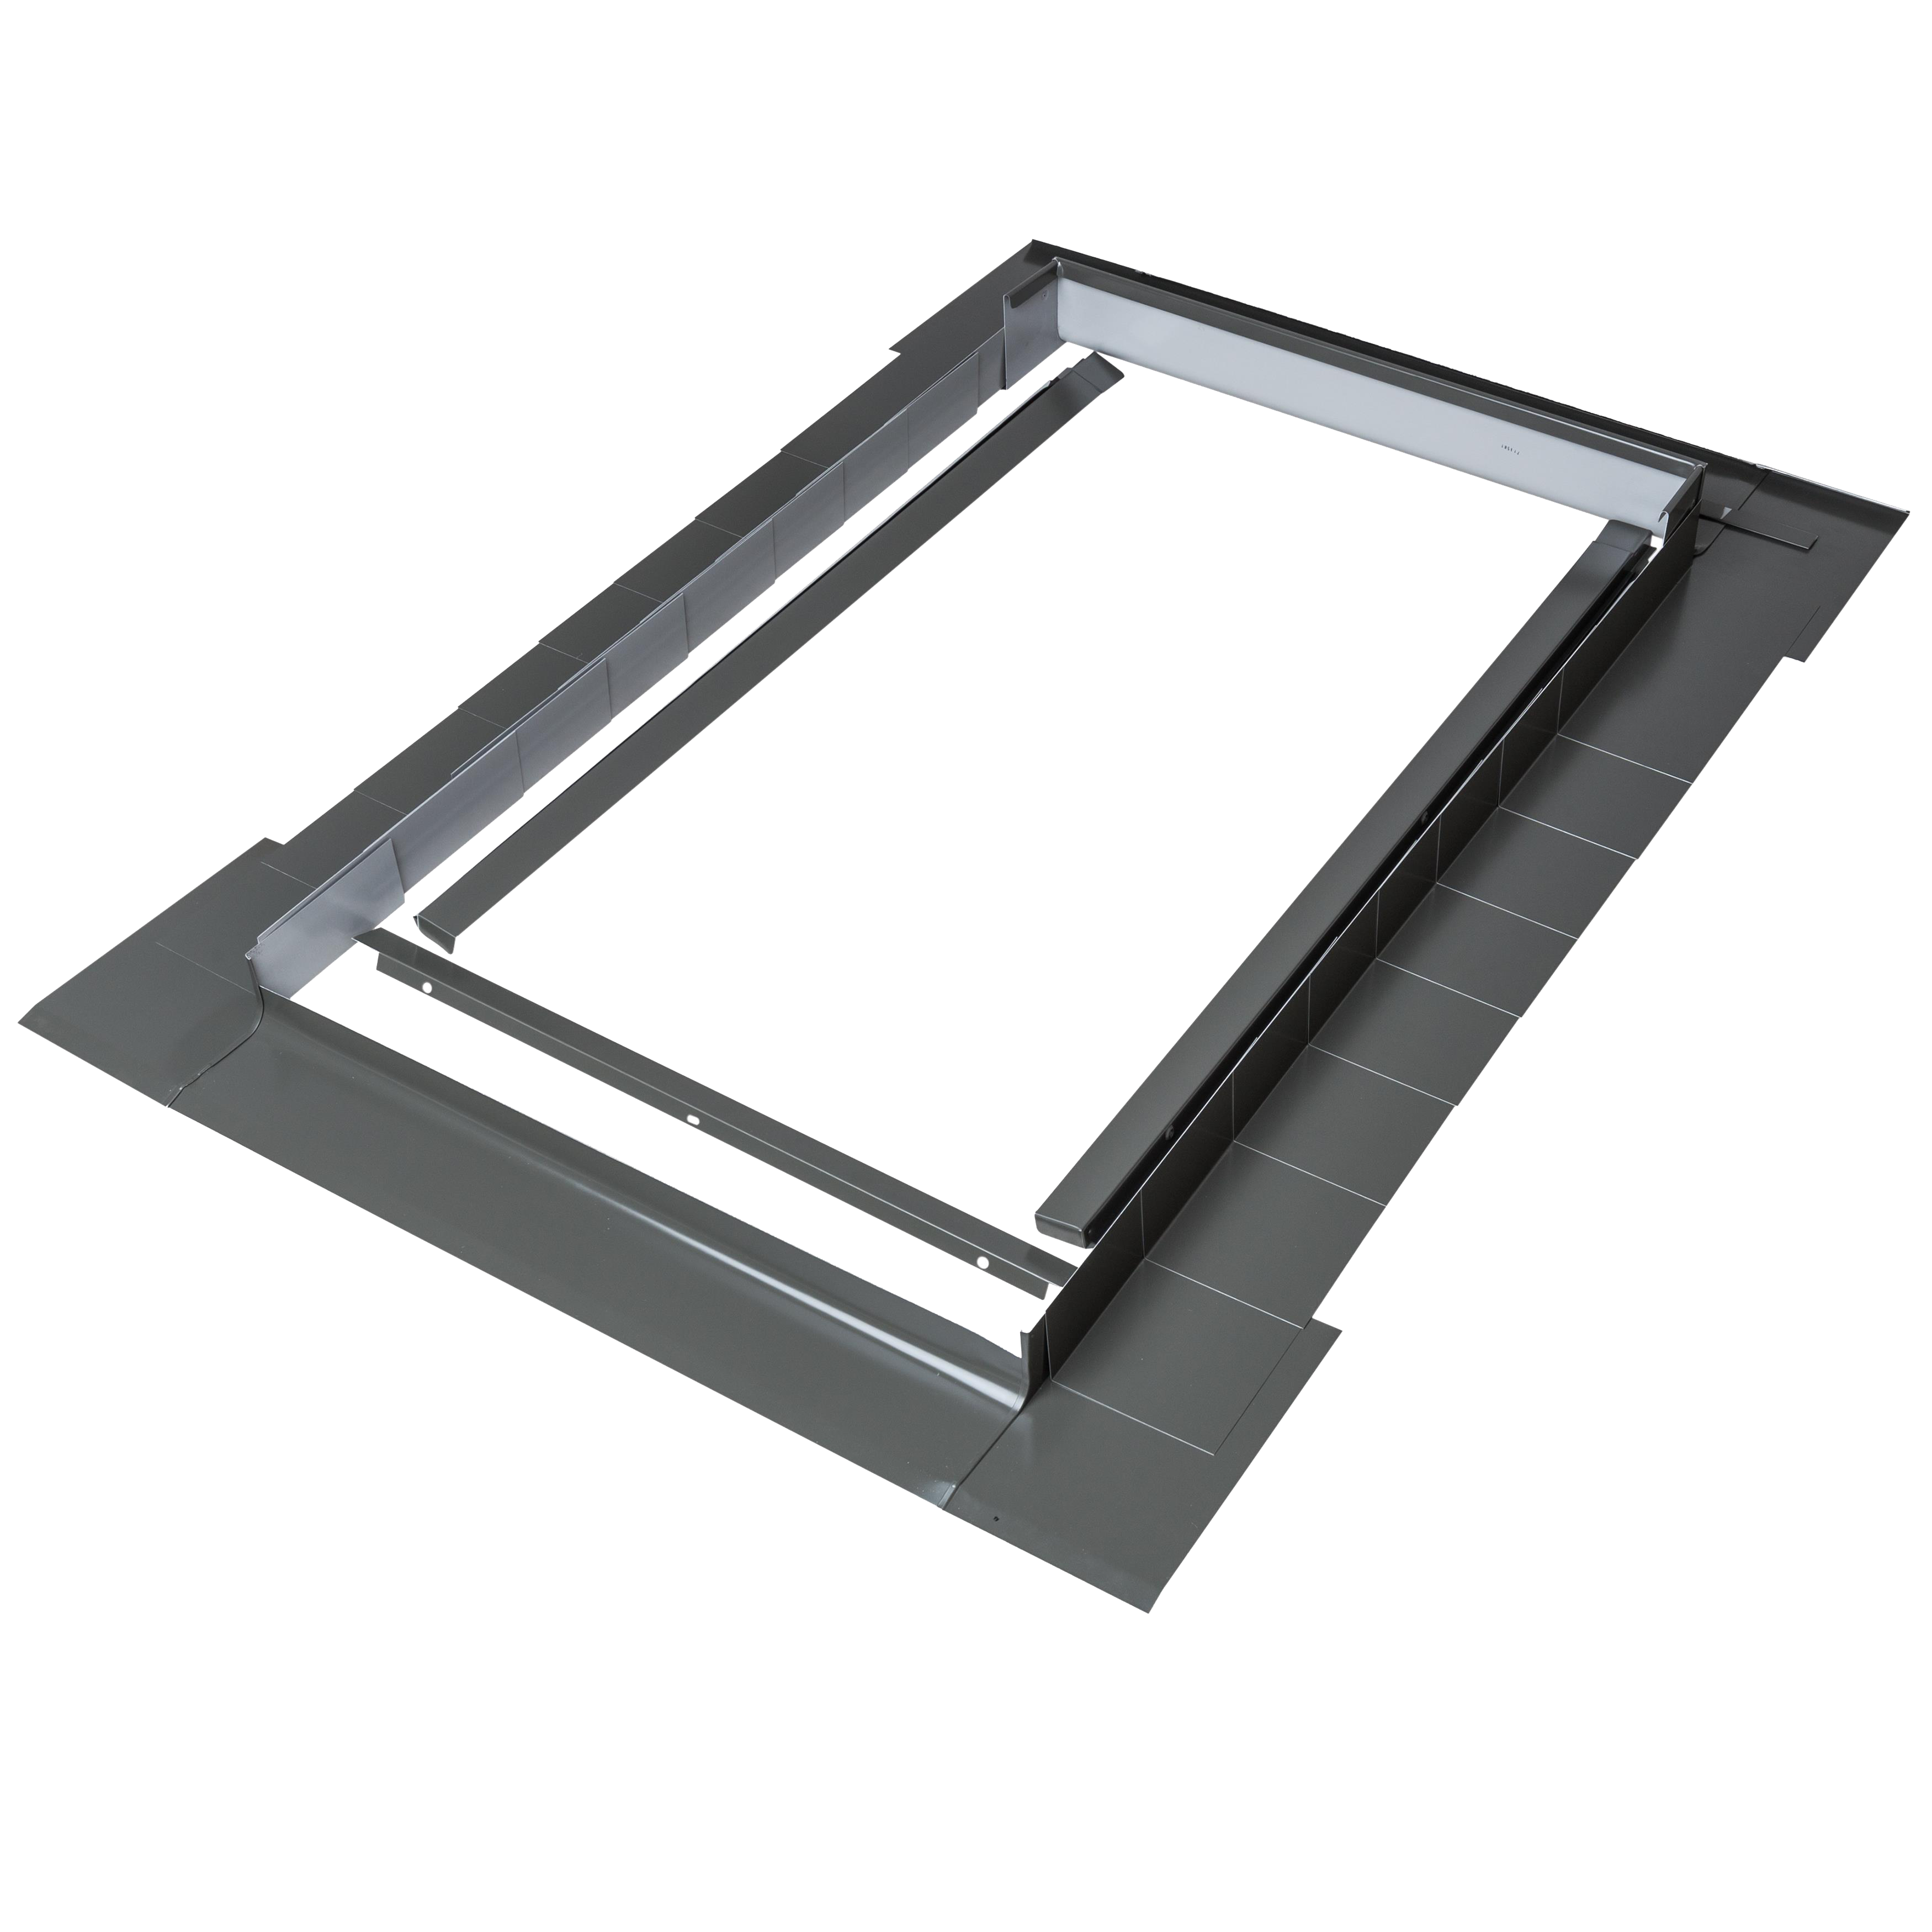 Tapajuntas ventana de tejado plano de aluminio fakro de 114 x 140 cm